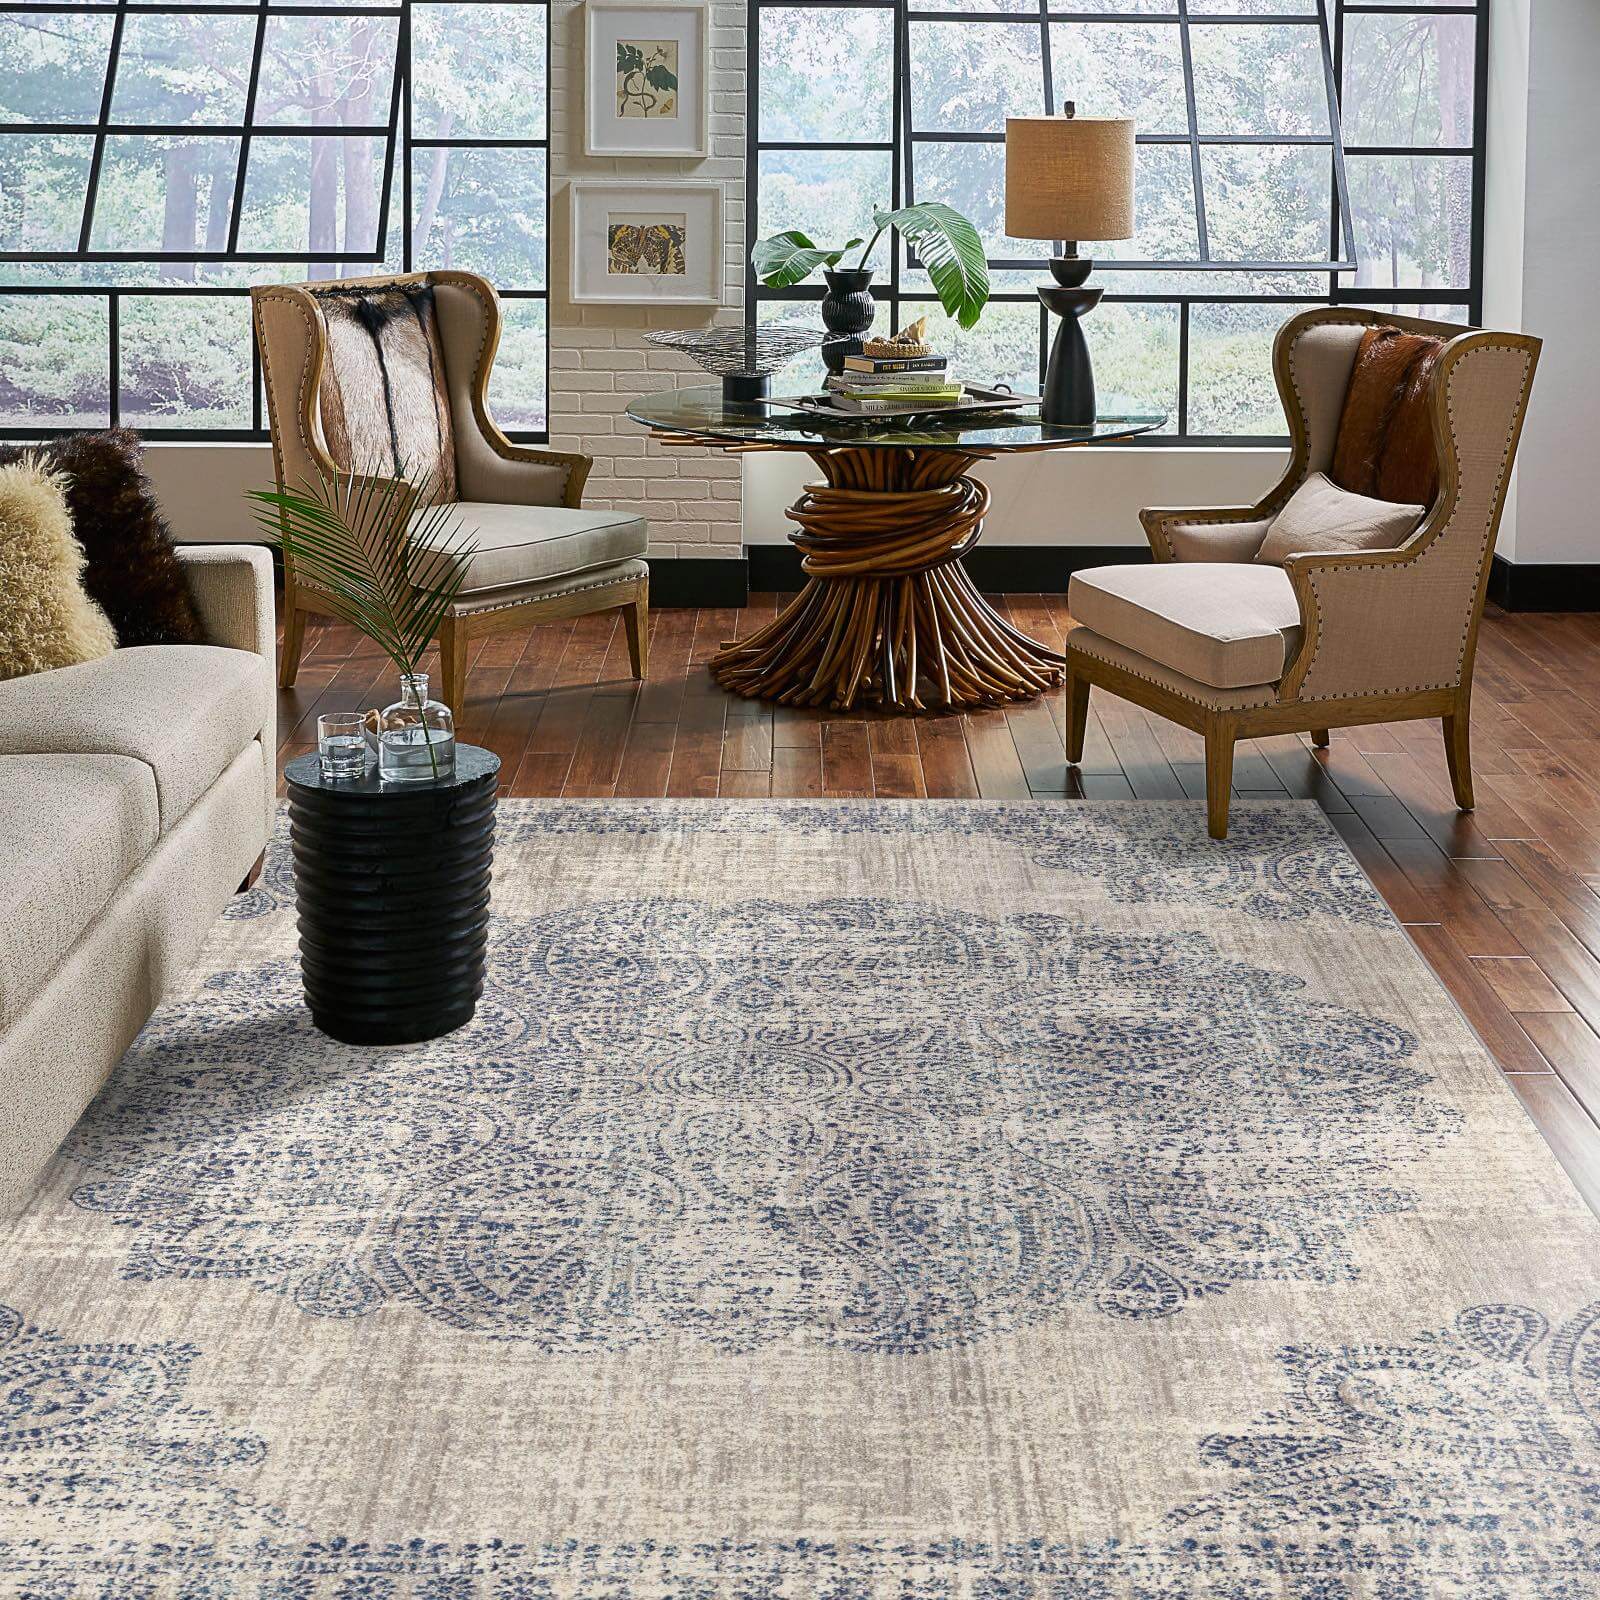 Area rug for living room | AJ Rose Carpets